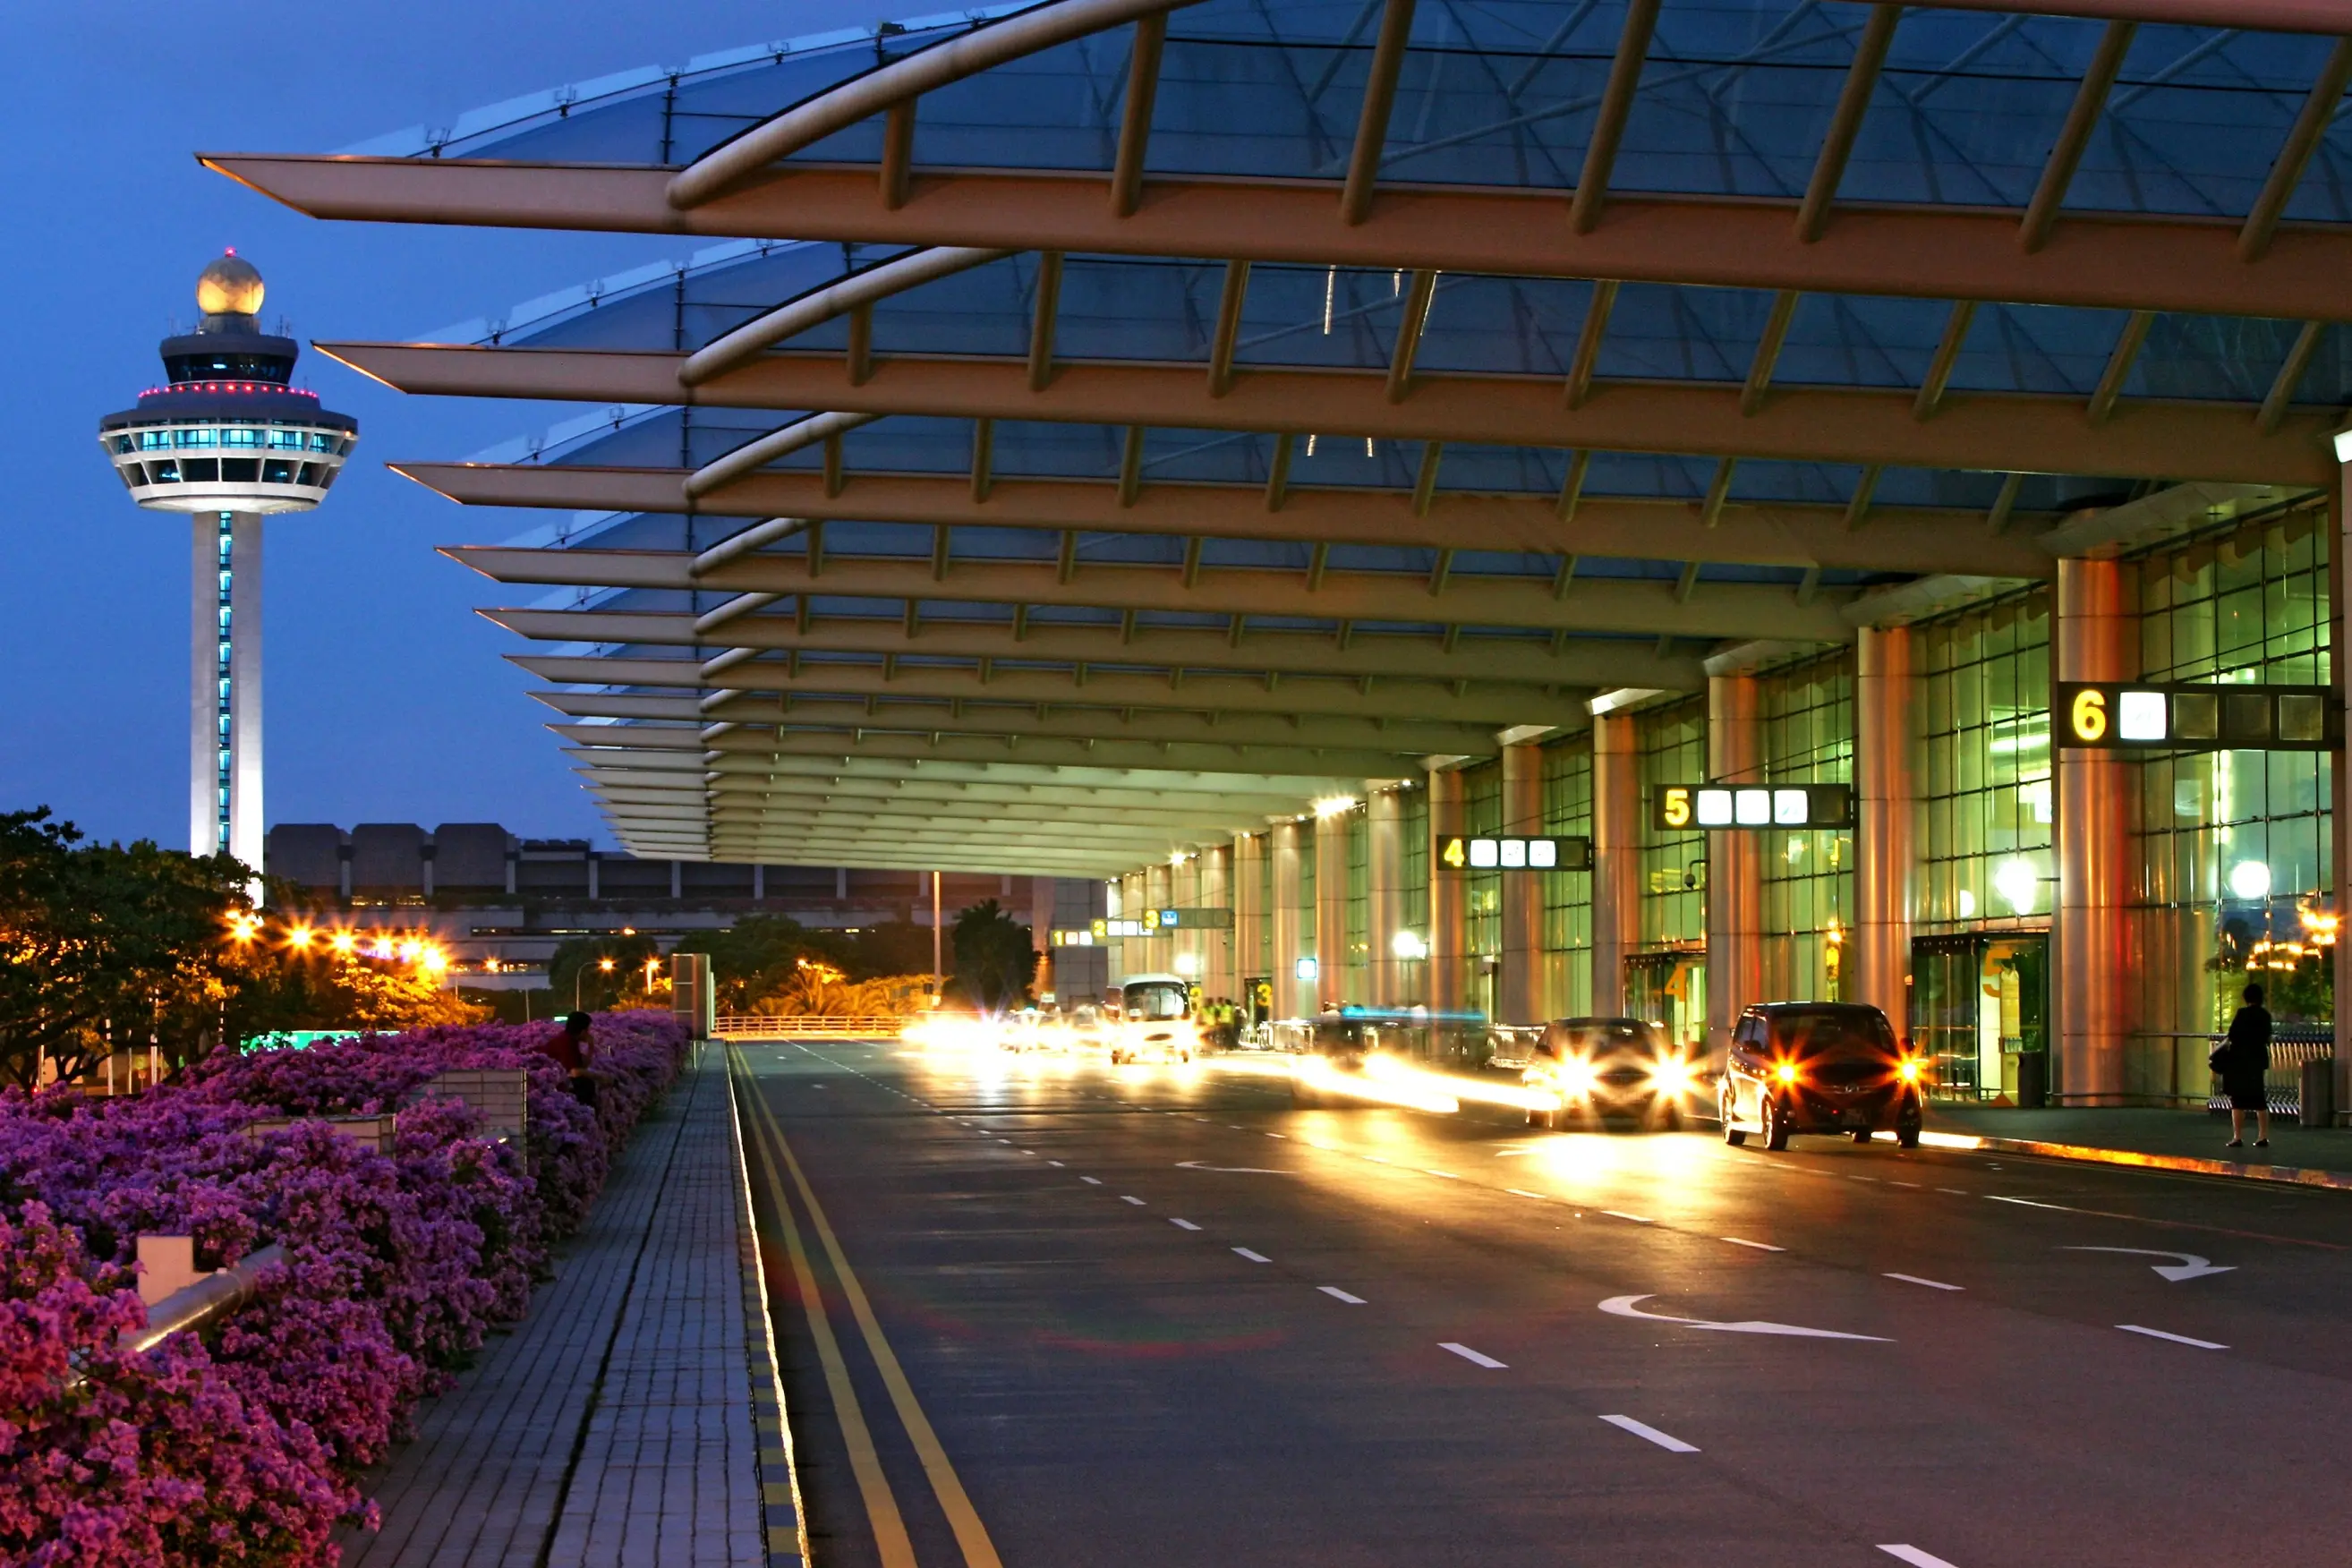 Deals this week: ADB Safegate, Changi Airports International, Judlau Contracting